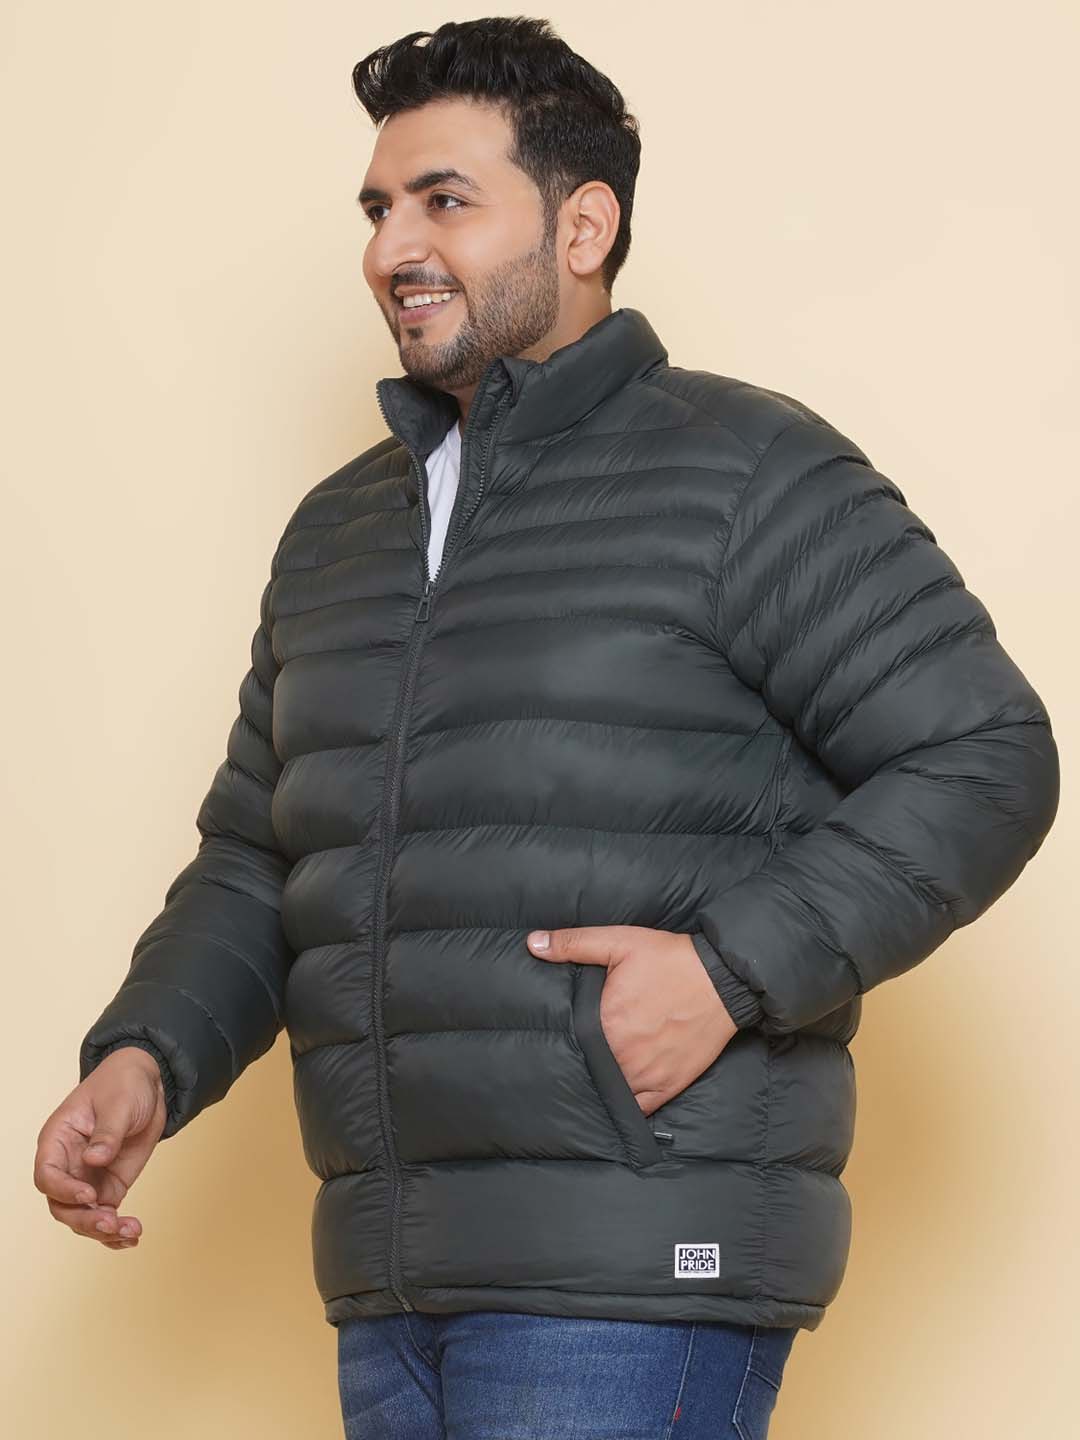 winterwear/jackets/JPJKT73083B/jpjkt73083b-4.jpg